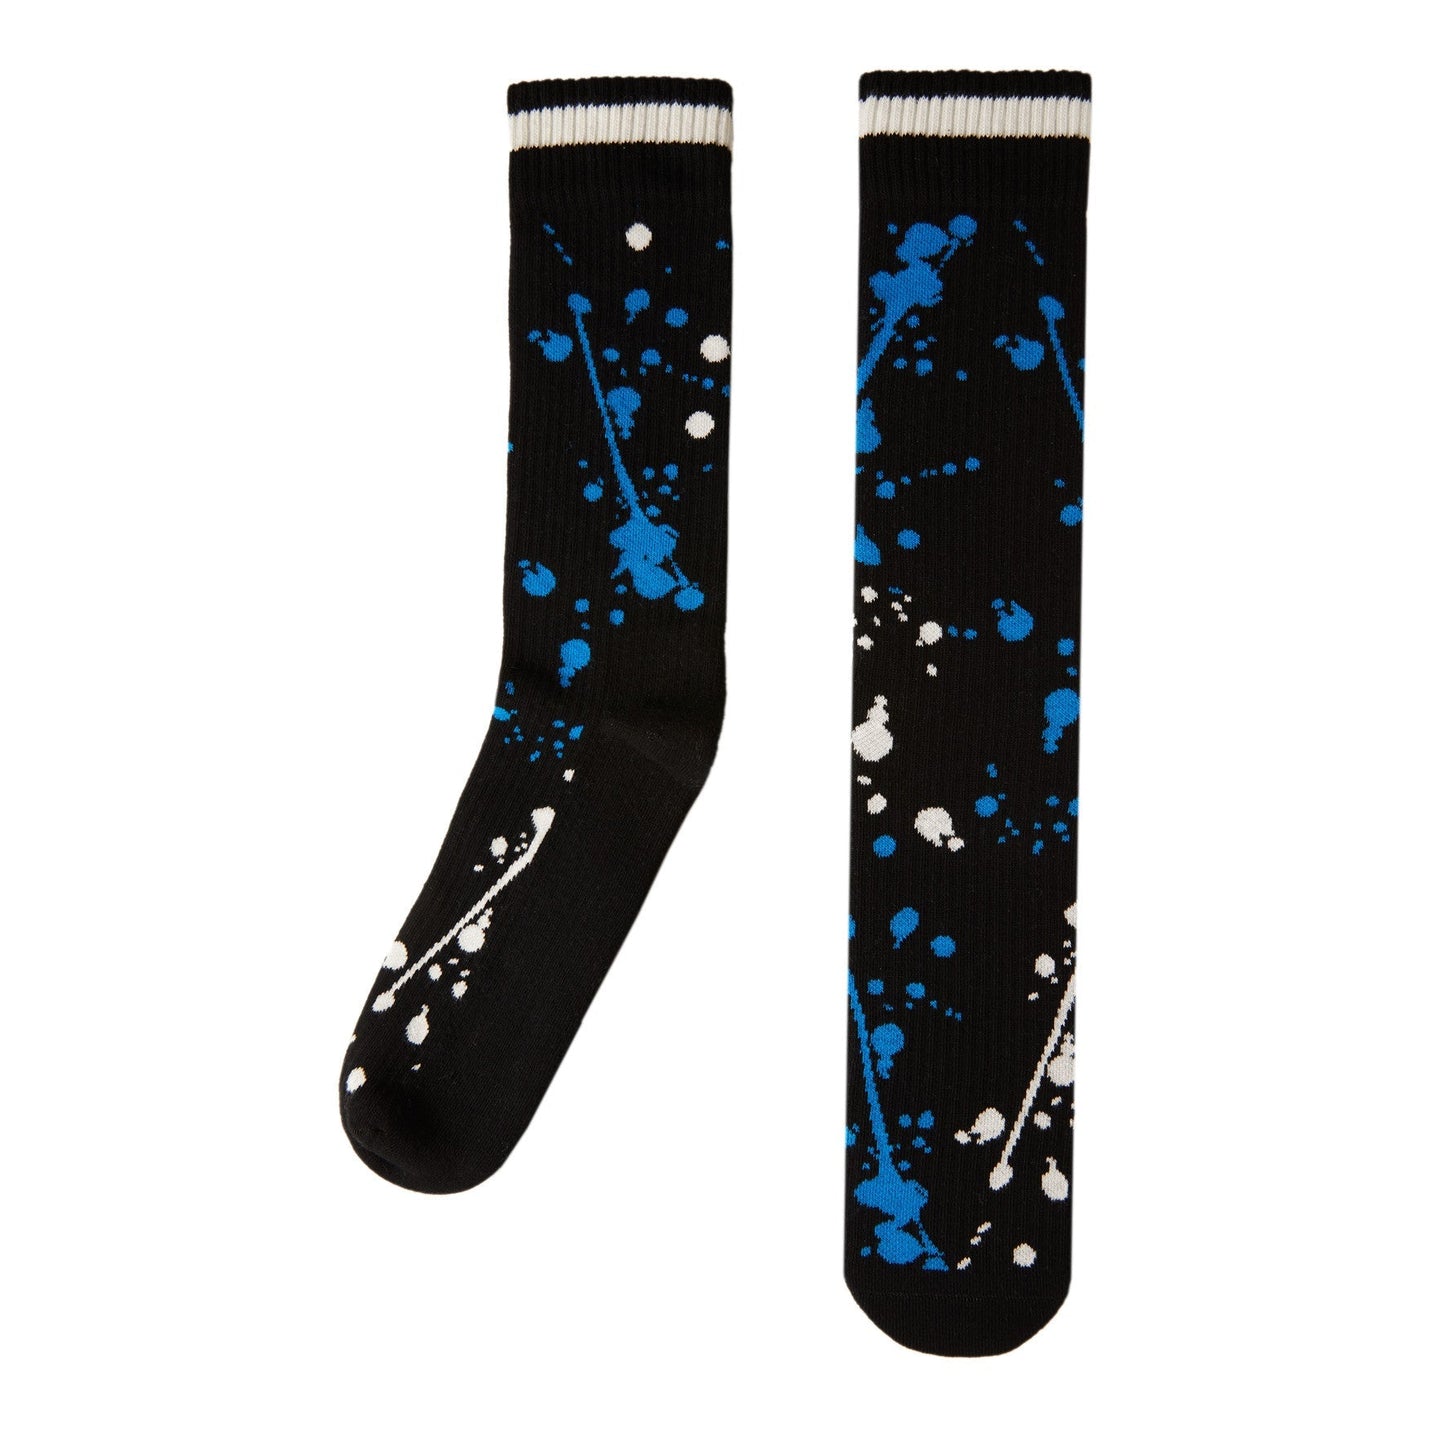 Water Performance Socks - Black/Blue